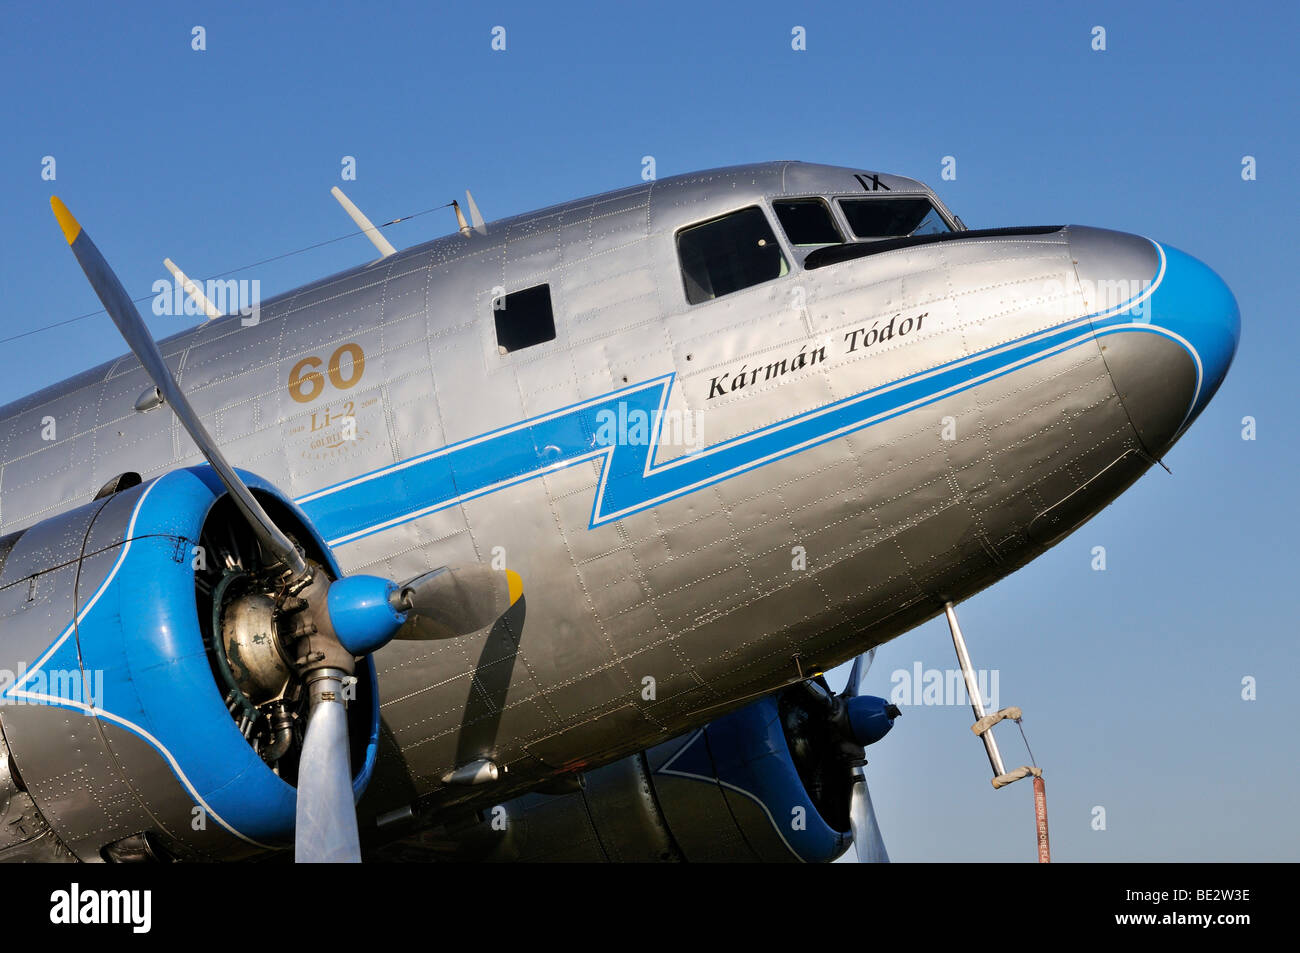 Details of a Russian passenger plane Lisunov Li-2, a licensed version of the Douglas DC-3, Germany, Europe Stock Photo